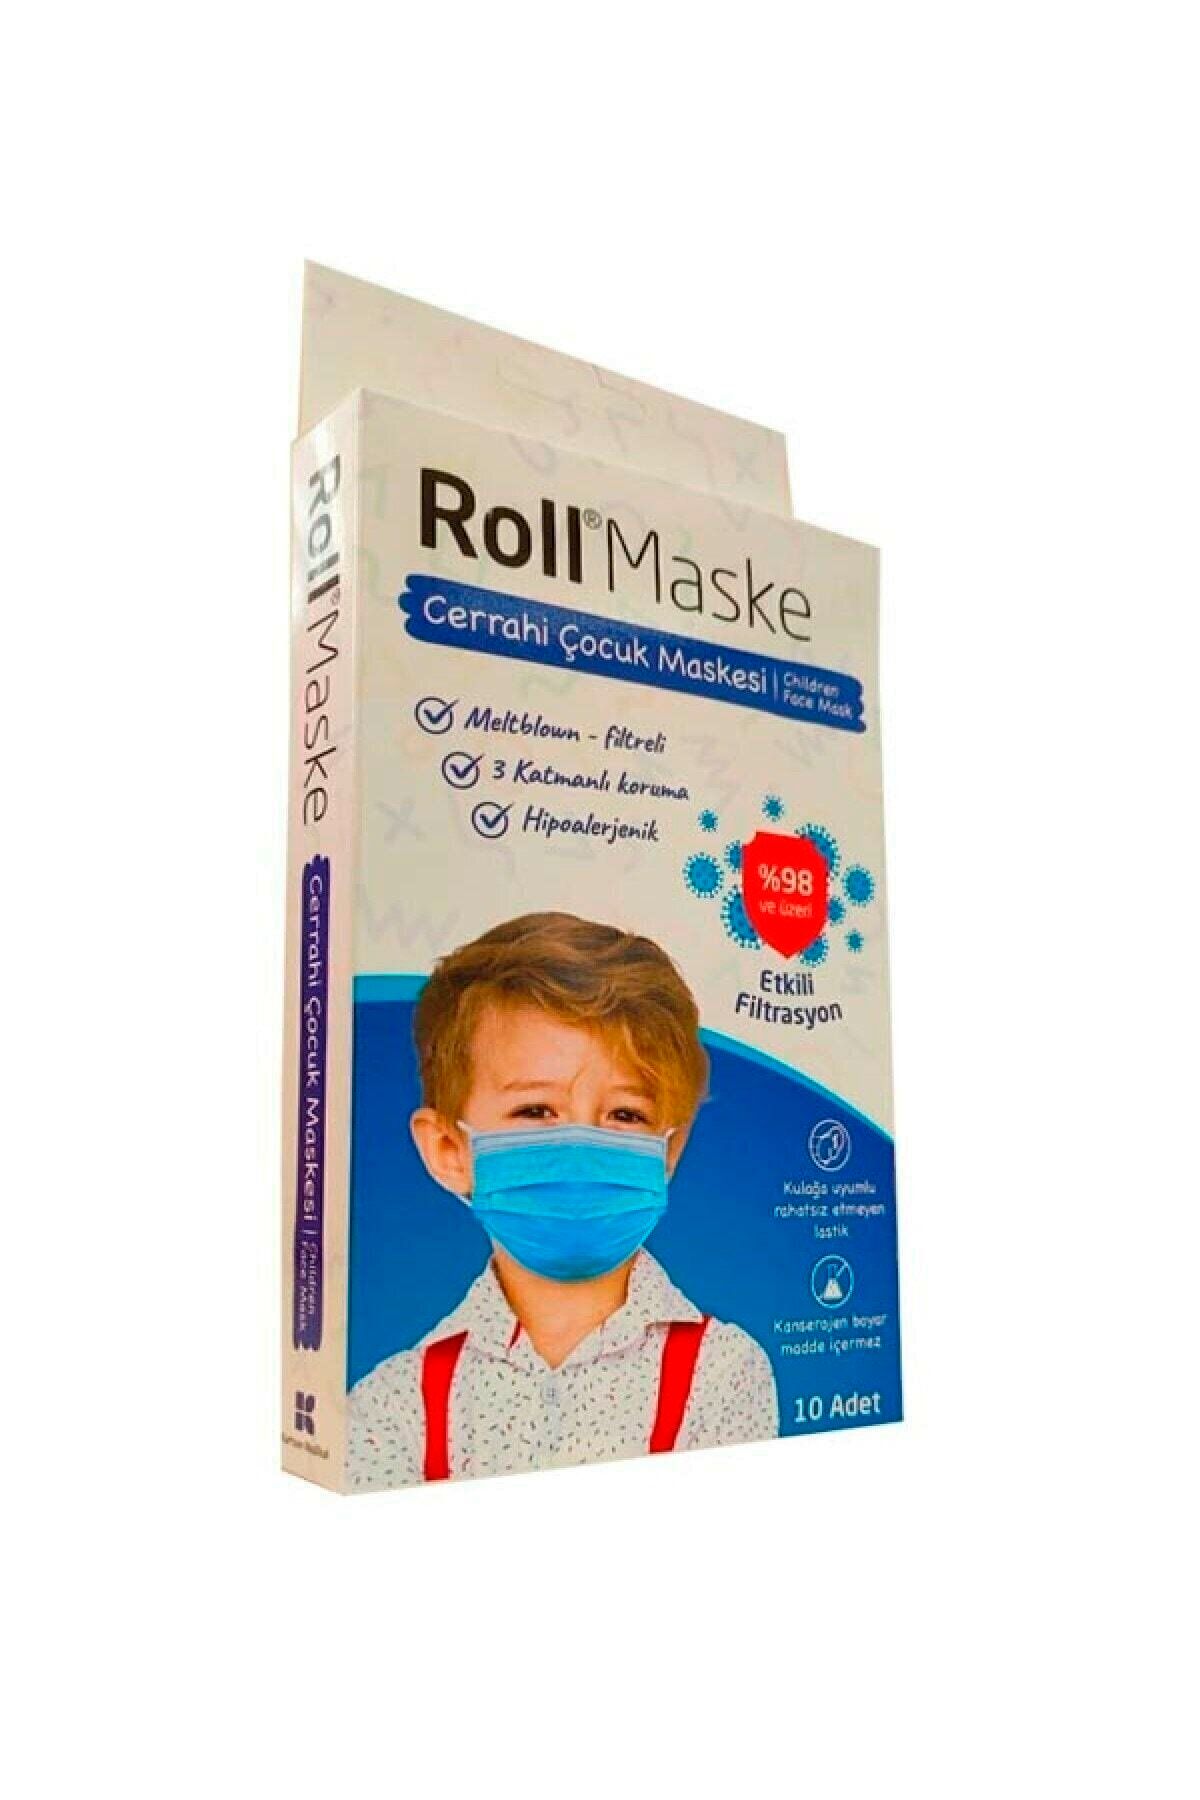 Roll Maske Cerrahi Çocuk Maskesi Erkek 1 Kutu 10 Adet